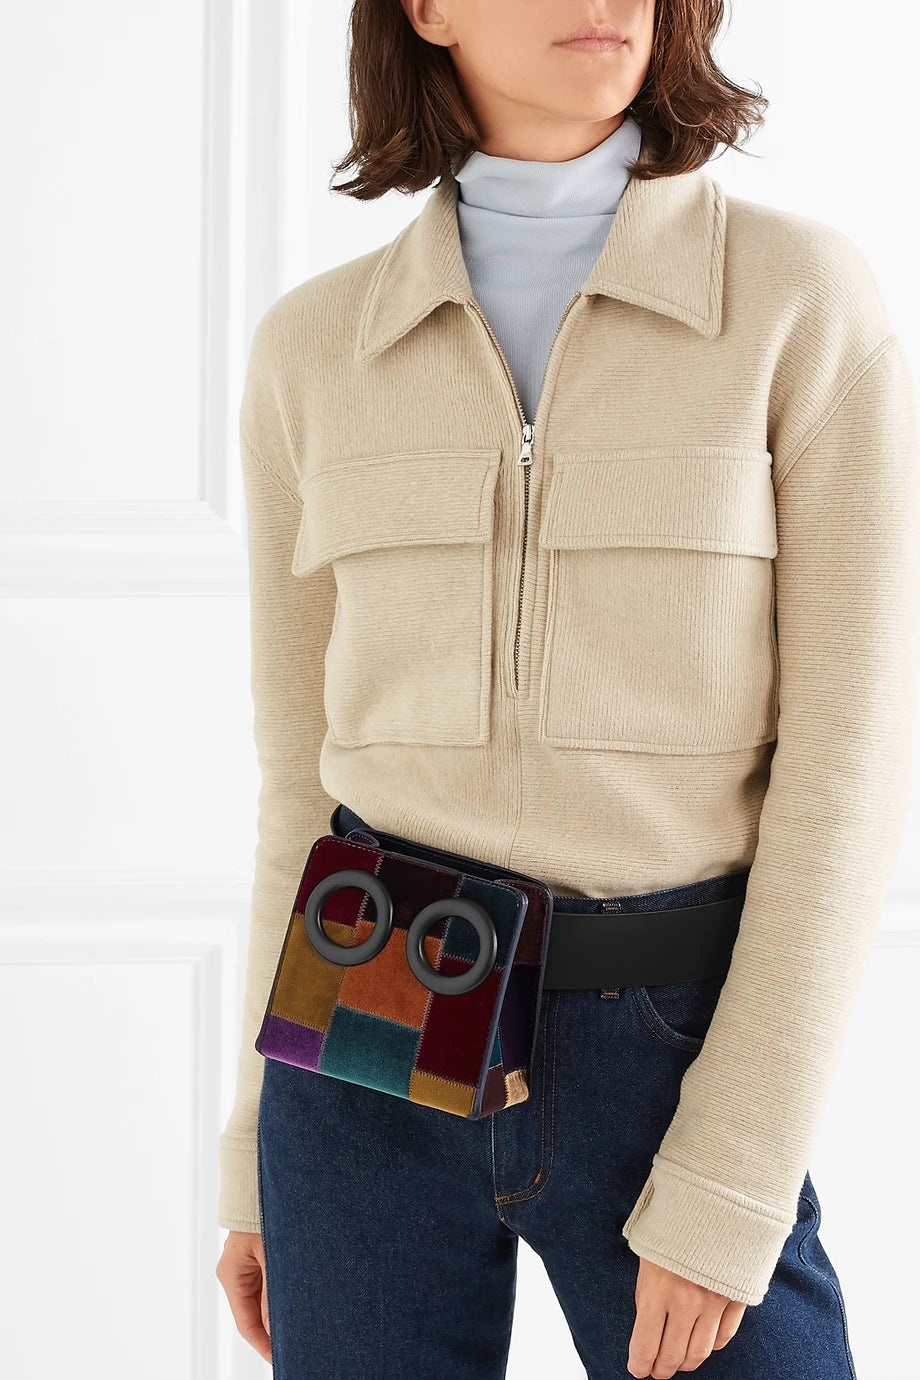 BOYY 'Deon' velvet & leather belt bag available at Manifesto Woman